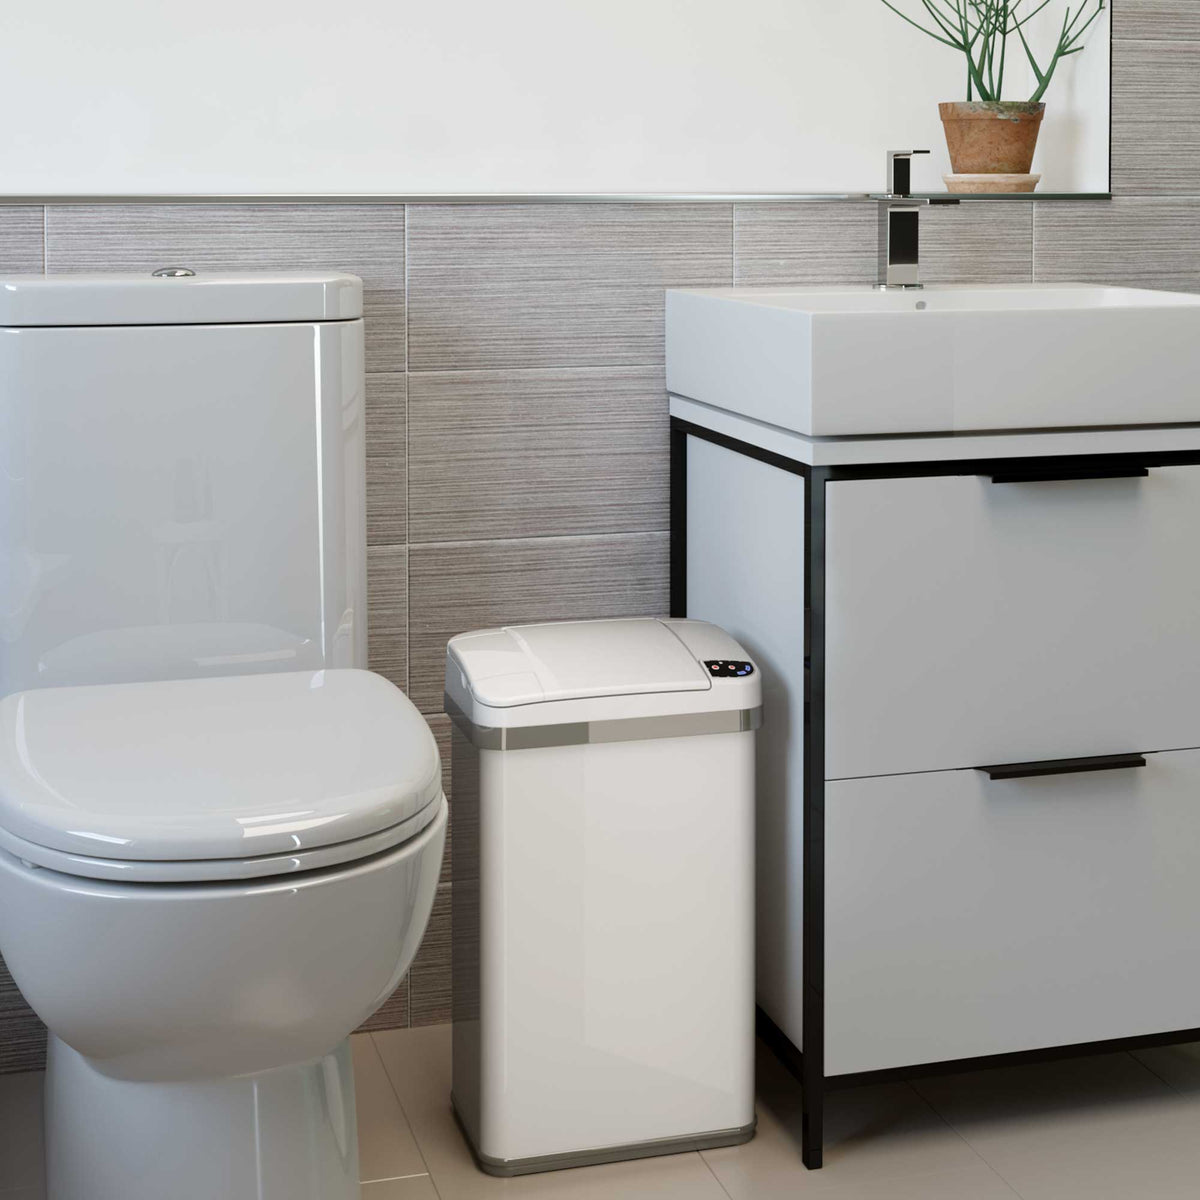 4 Gallon / 15 Liter White Sensor Bathroom Trash Can with Odor Filter and Lemon Fragrance in bathroom